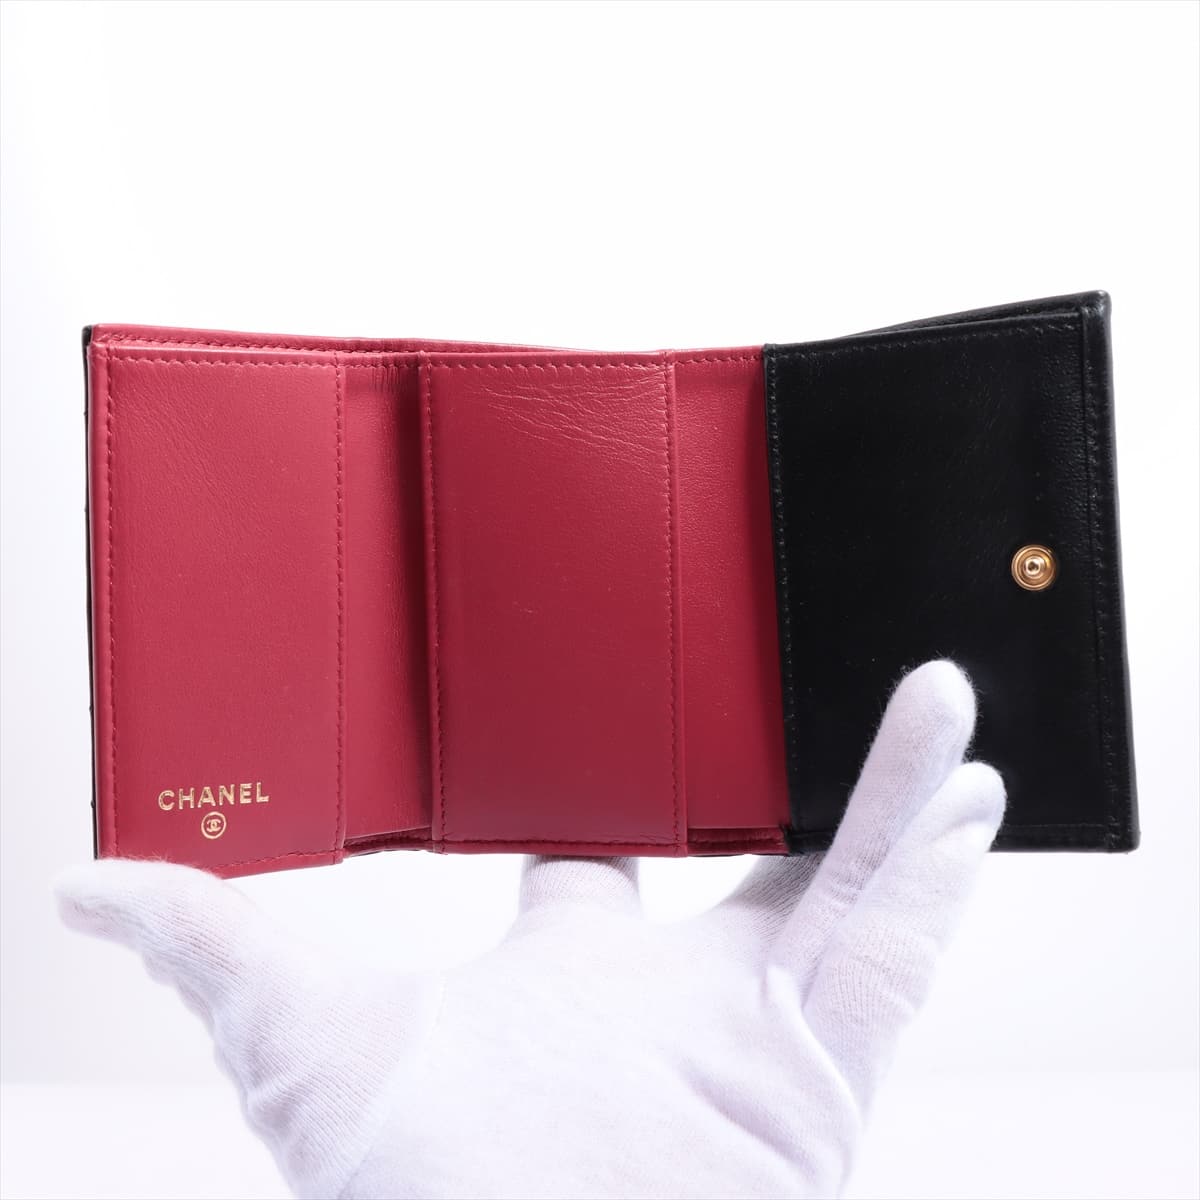 Chanel CHANEL 19 Lambskin Compact Wallet Black Gold Metal fittings 30